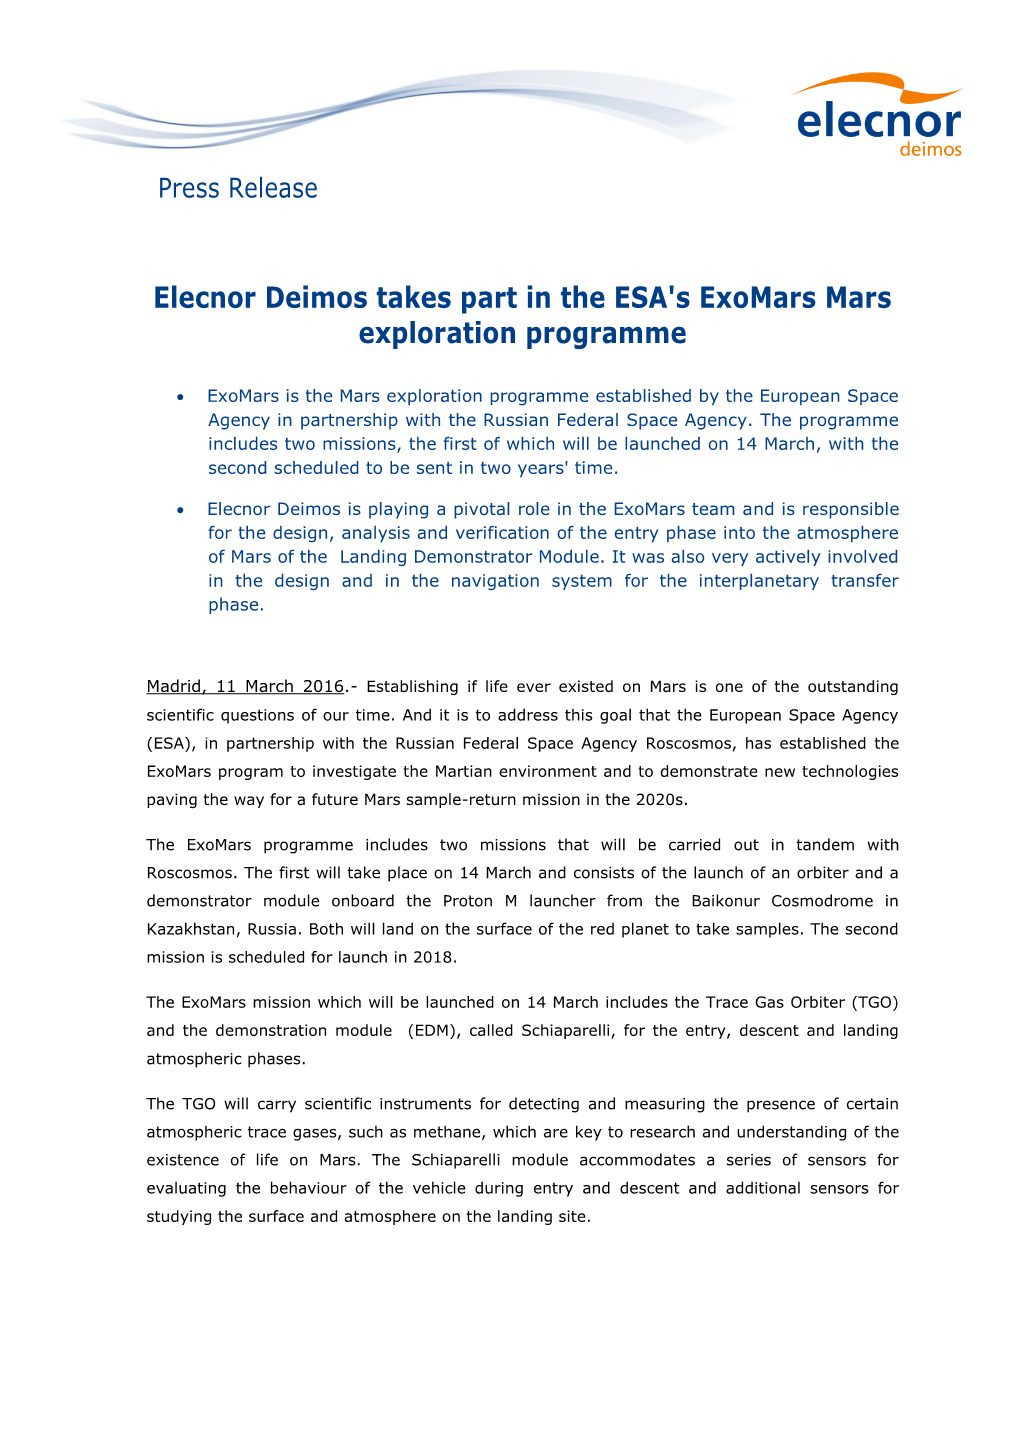 Elecnor Deimos Takes Part in the ESA's Exomars Mars Exploration Programme